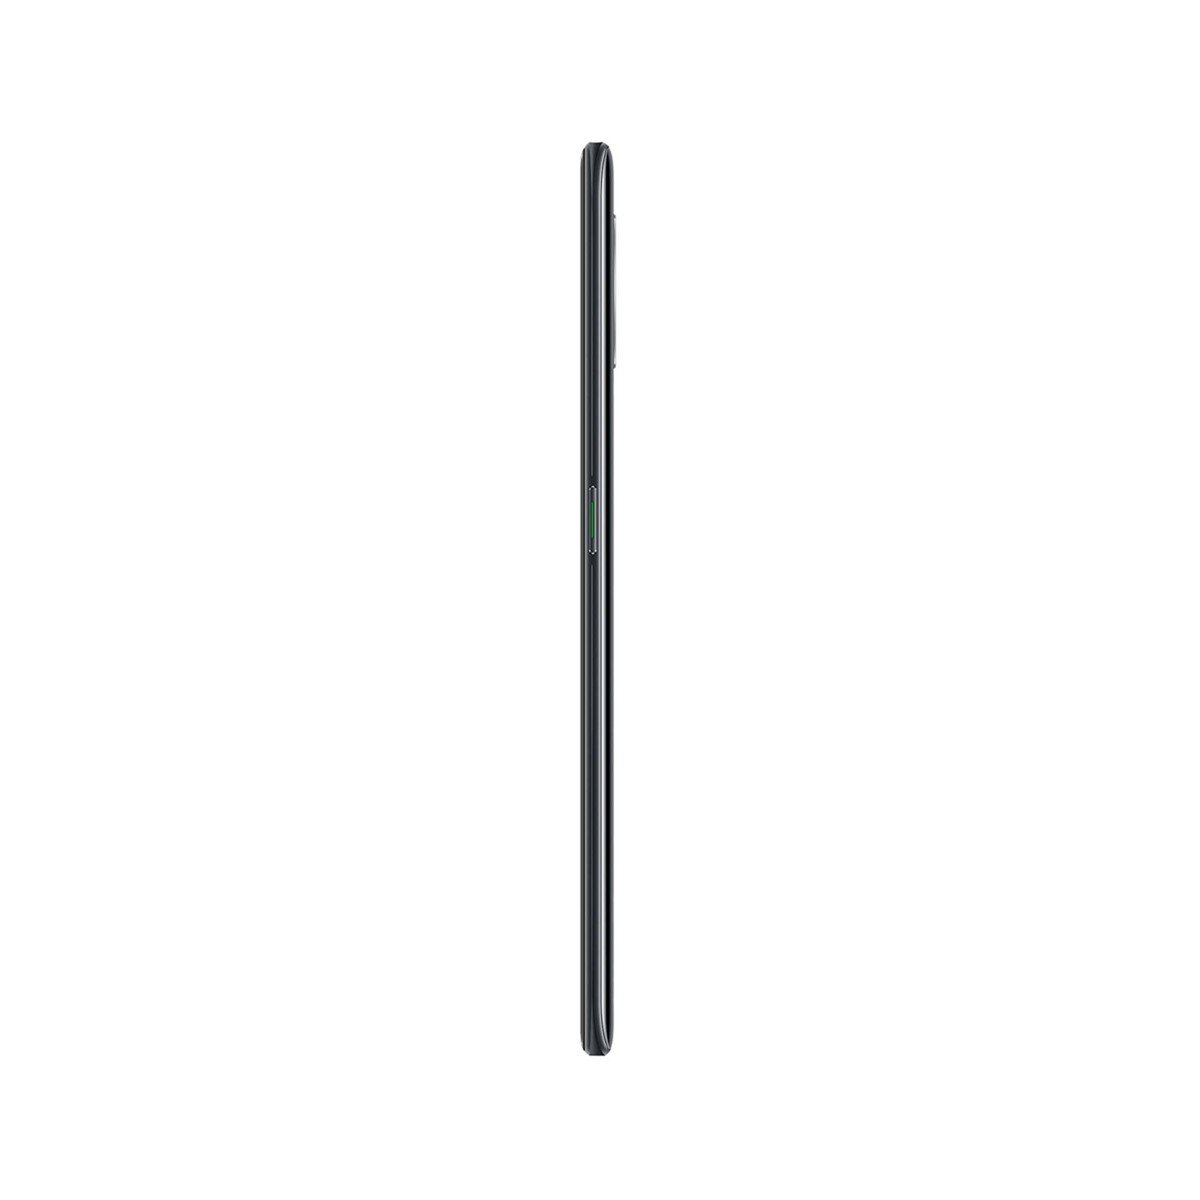 Oppo A5 2020 128GB Mirror Black